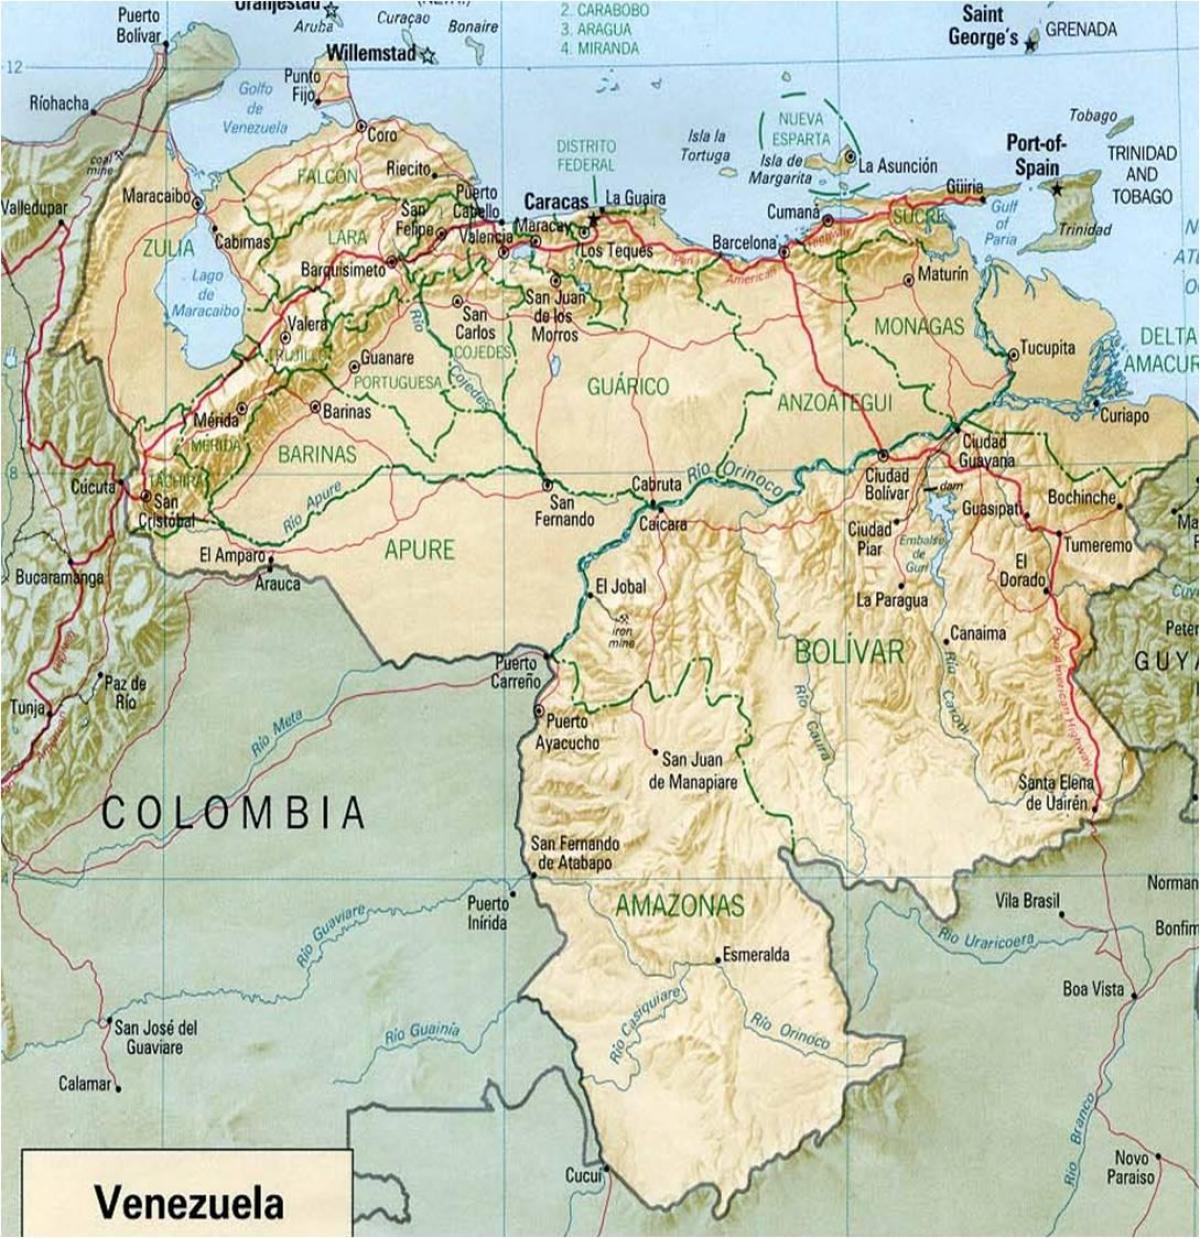 kart over venezuela river